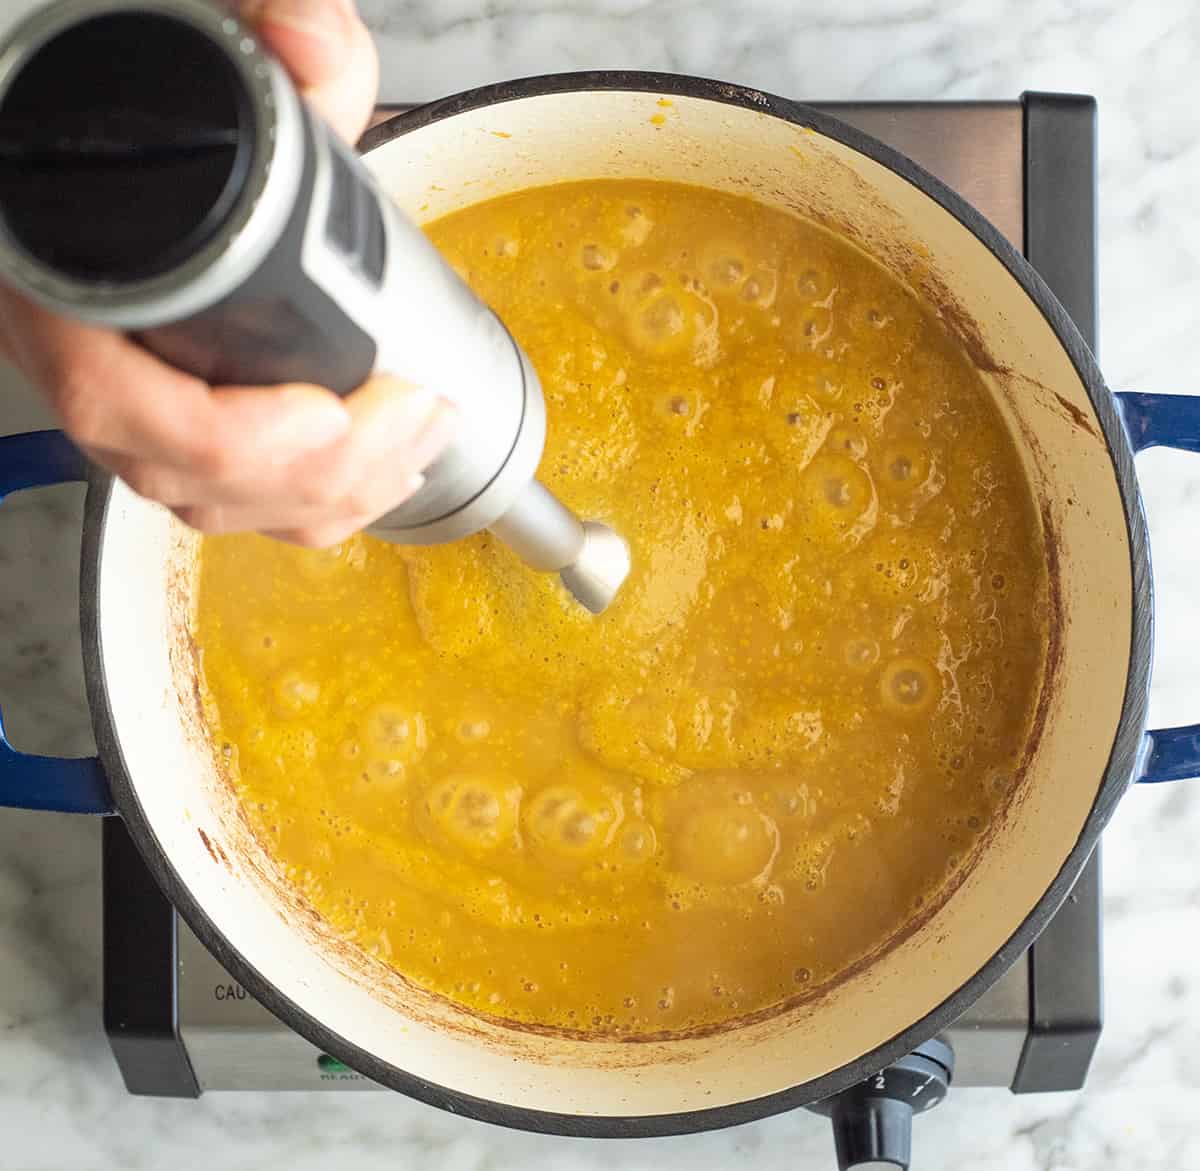 blending butternut squash soup with an immersion blender